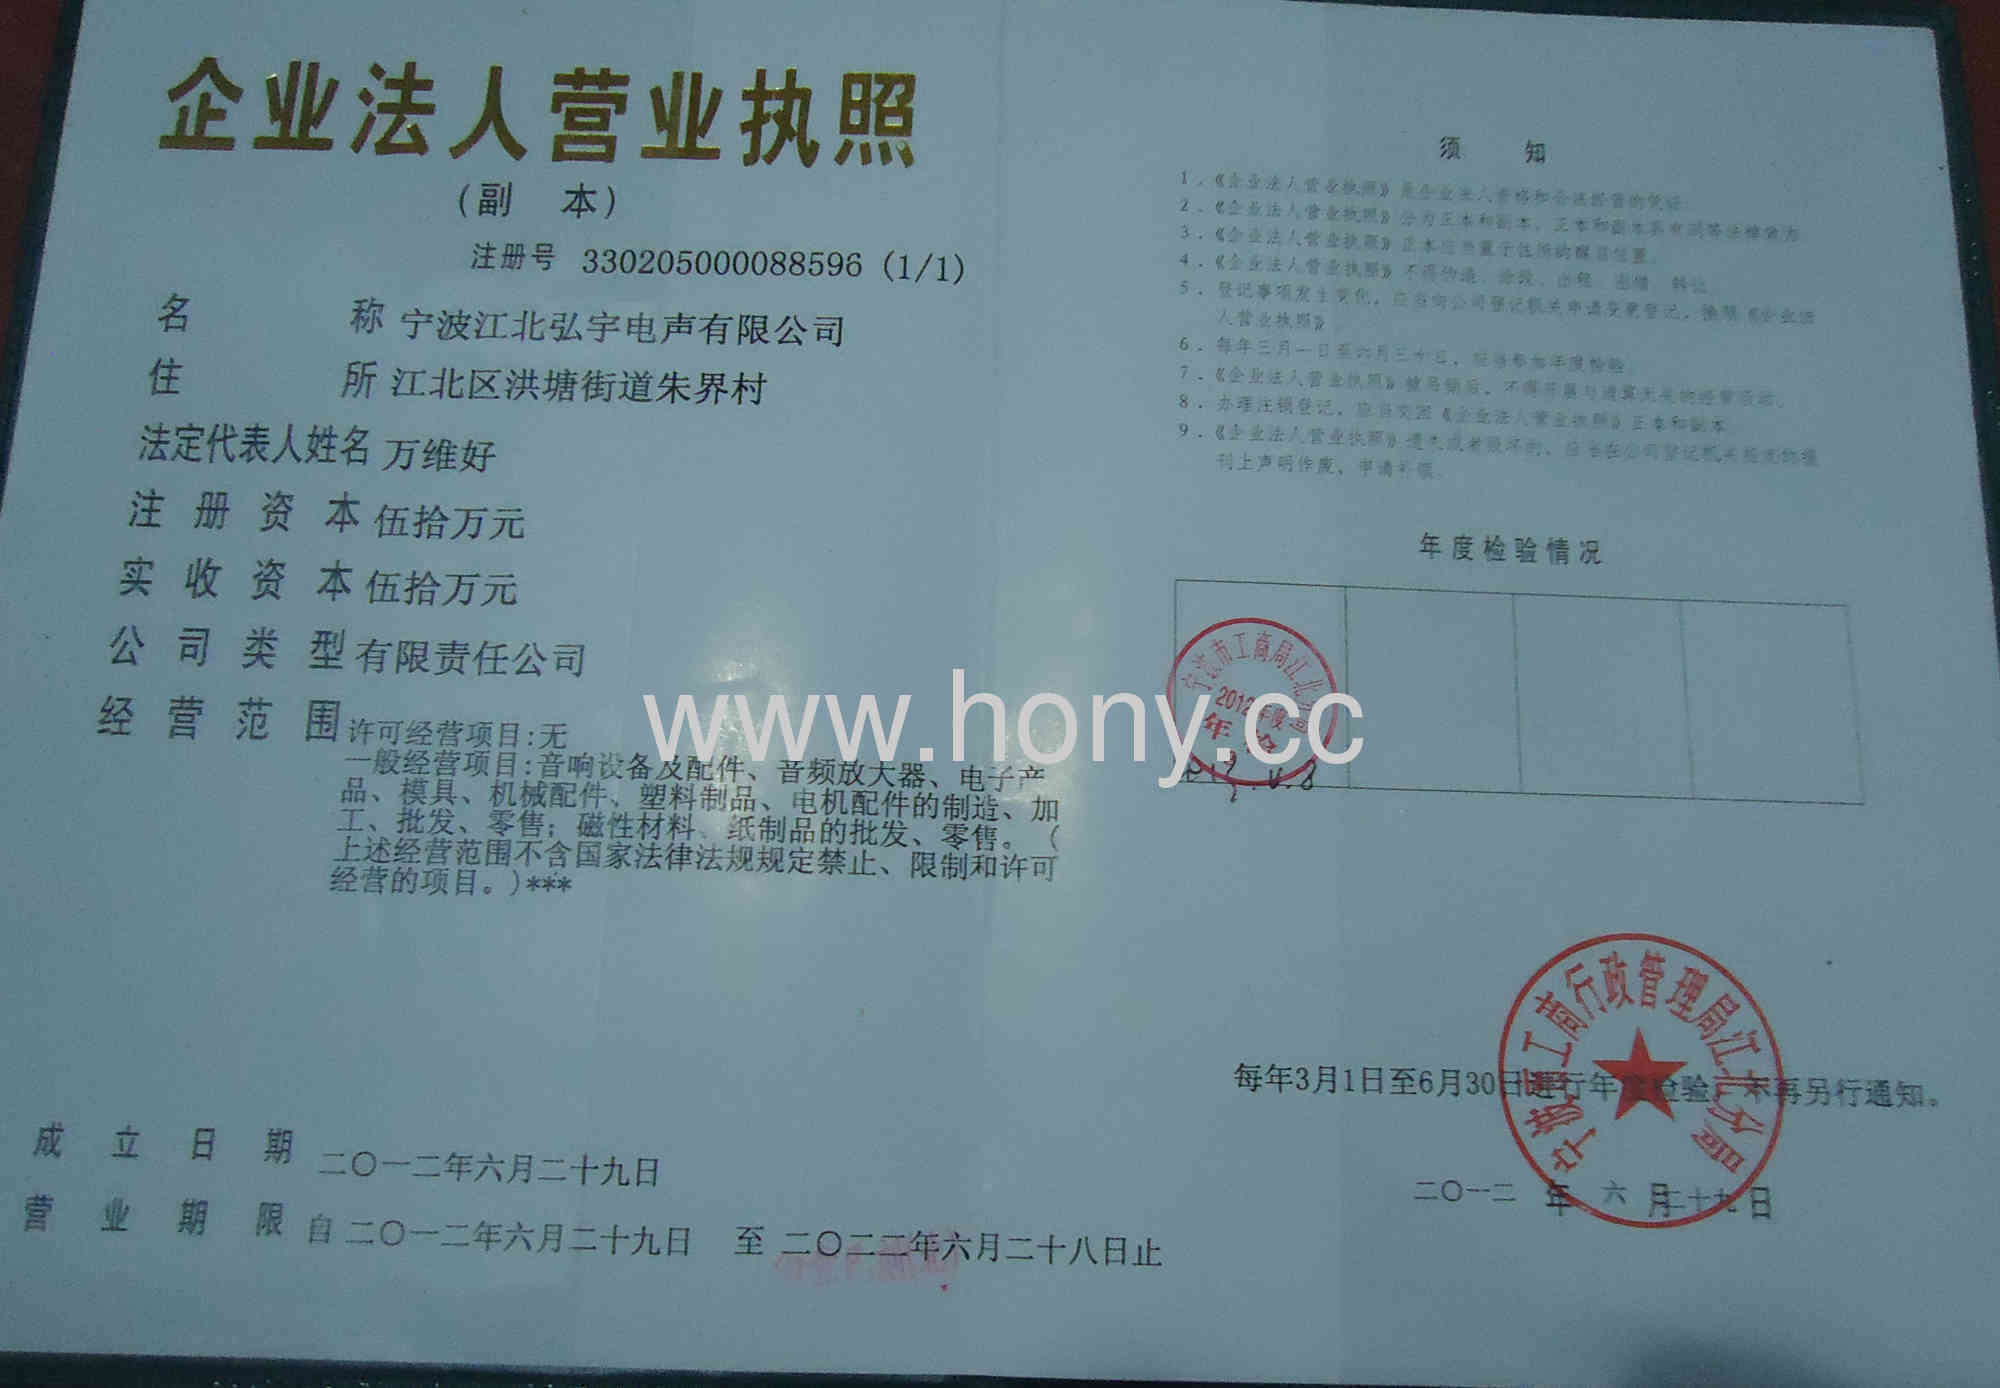 Certificate of CEIEC Company Registration